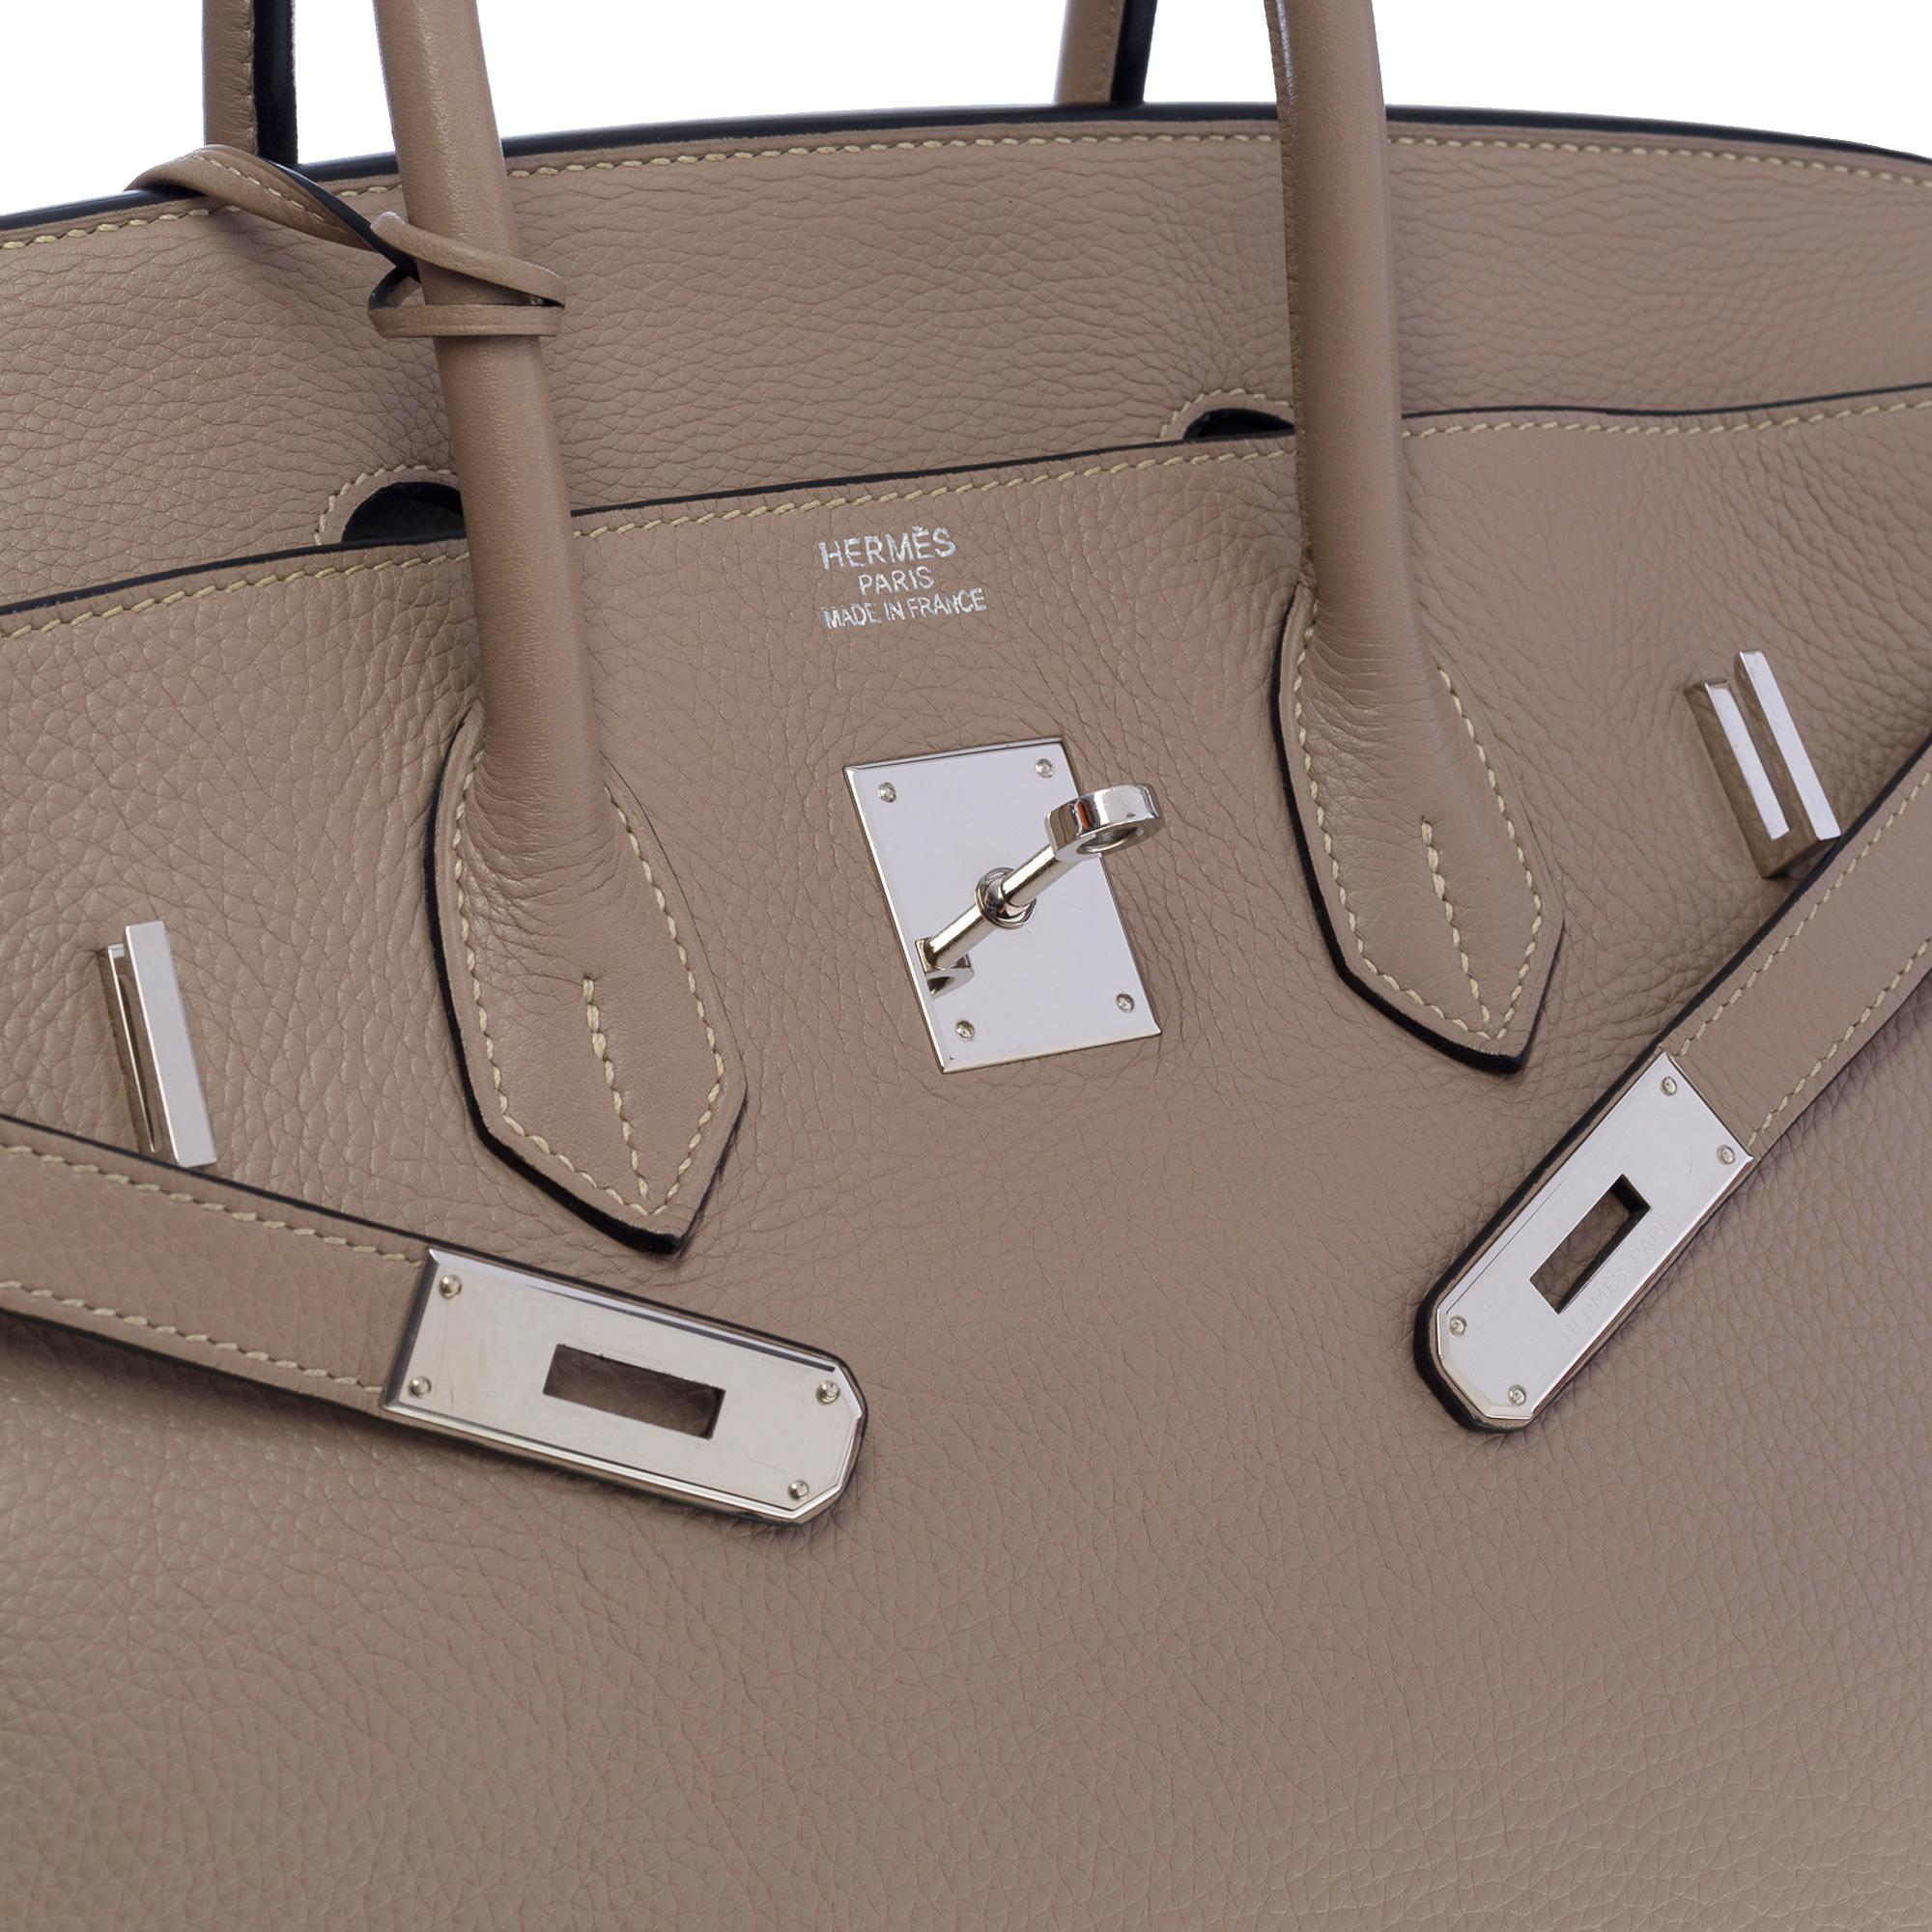 Superb Hermes Birkin 35 cm handbag in dove gray Togo leather, SHW 1